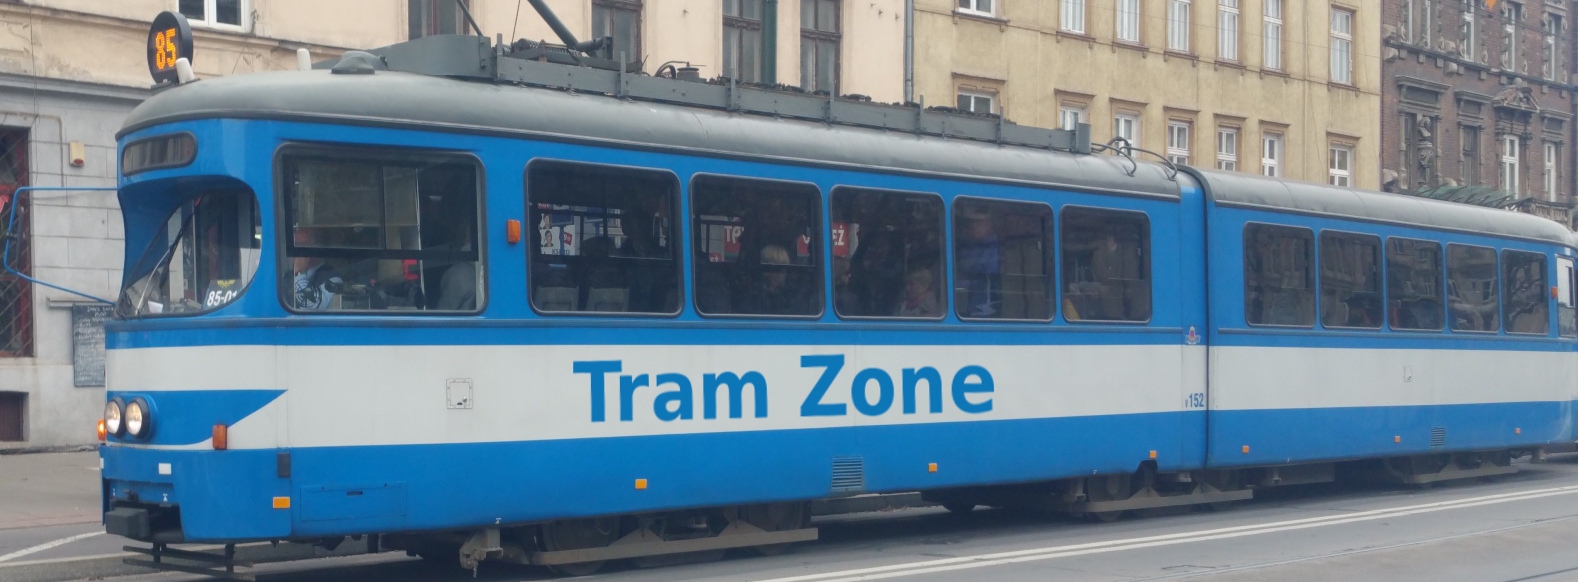 Tram.Zone - Information on tram systems worldwide.